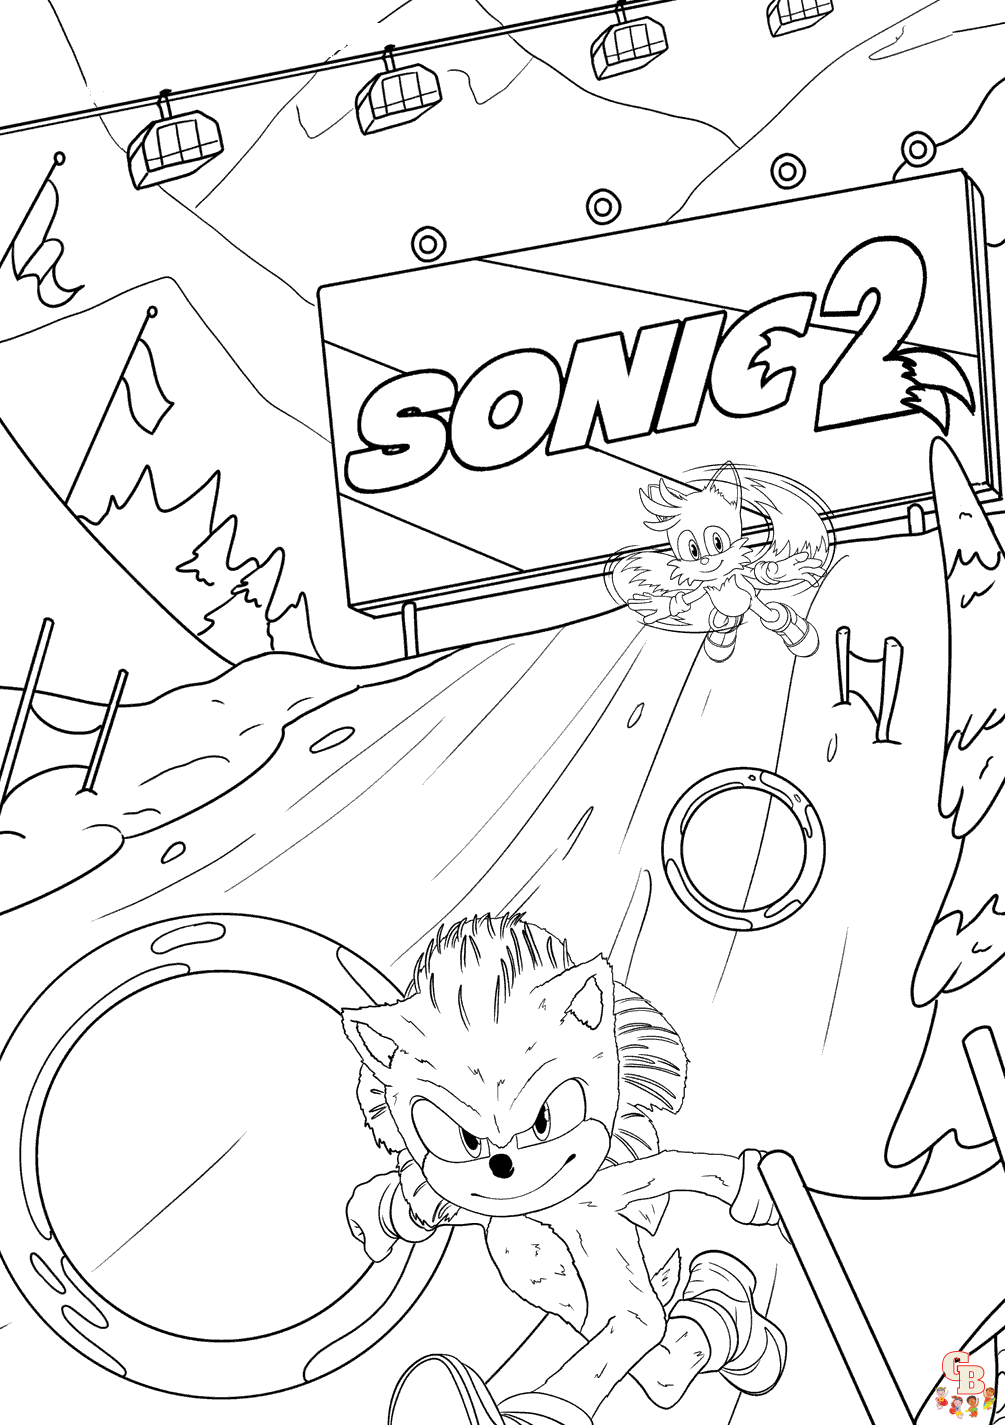 Sonic the Hedgehog 2 Ausmalbilder fuer kinder